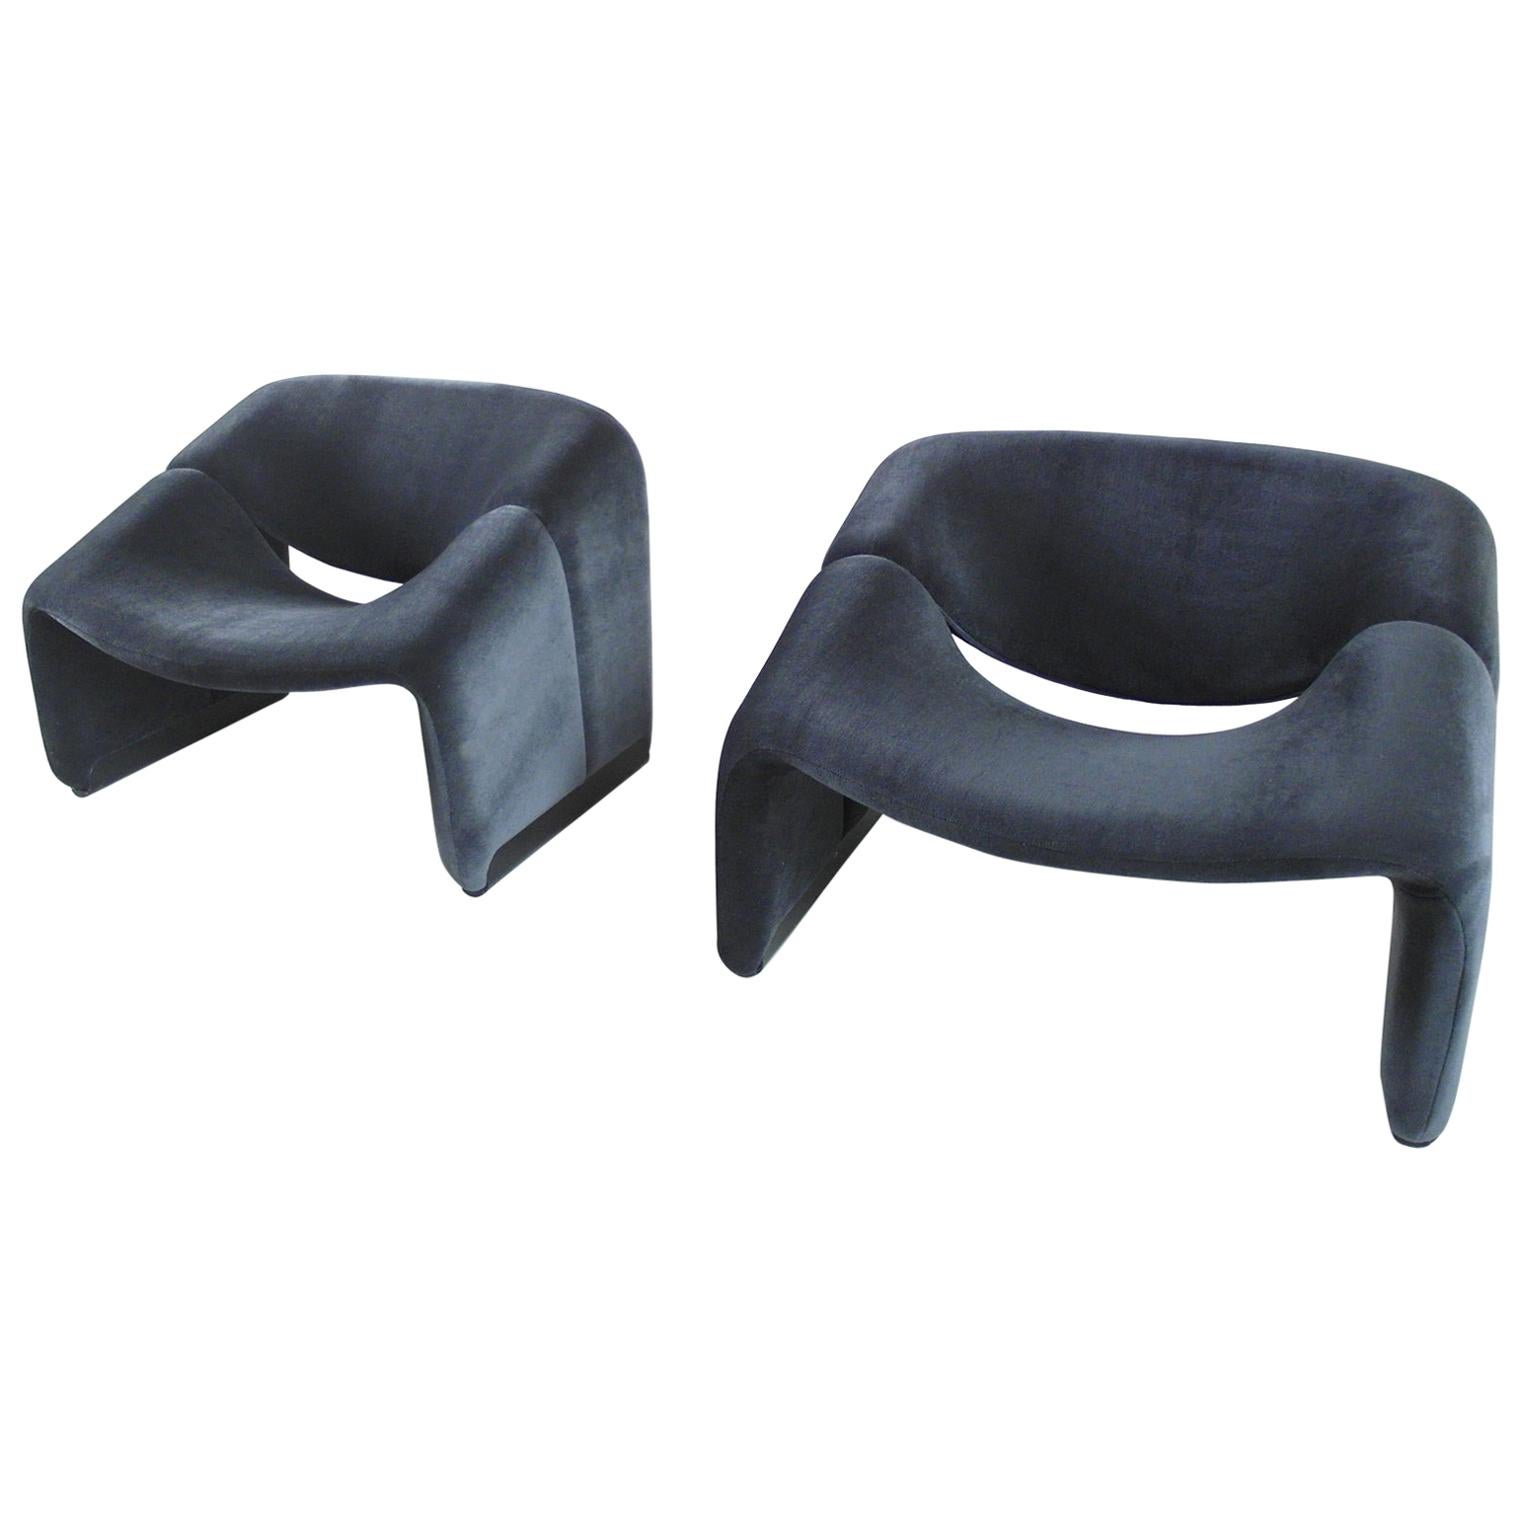 Pair of F598 Groovy Chairs in Velvet by Pierre Paulin for Artifort, 1973